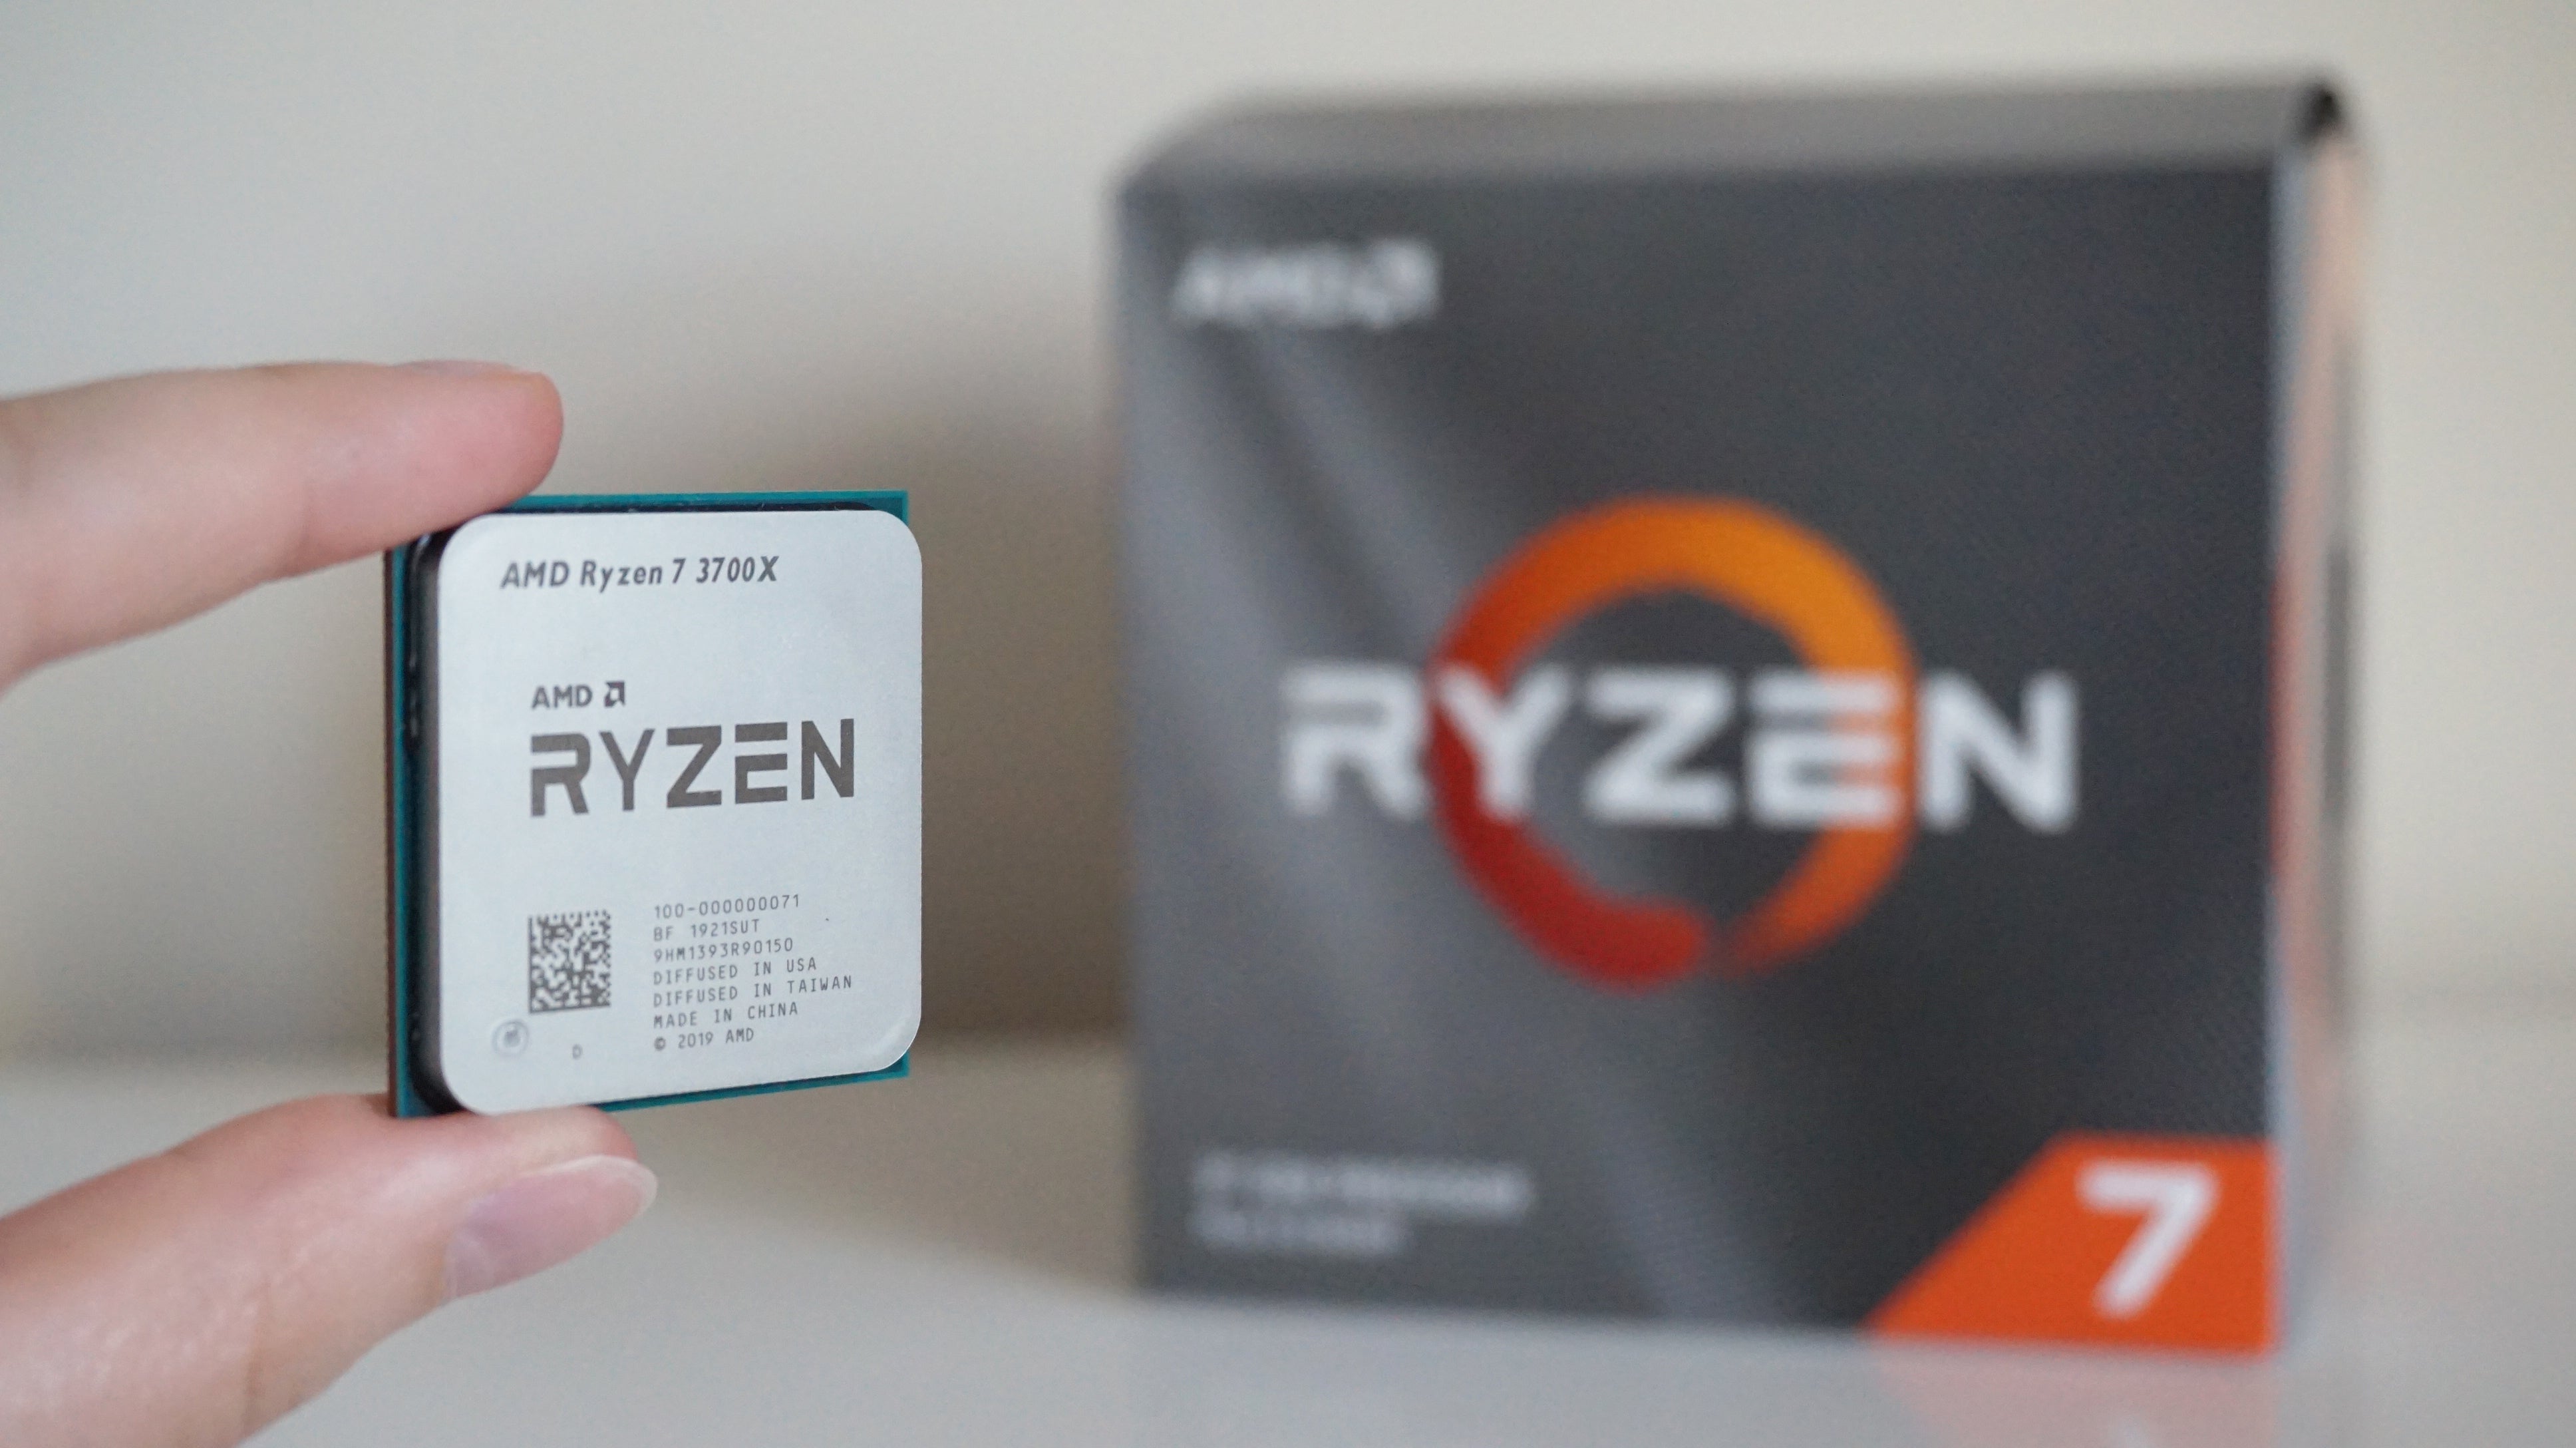 AMD Ryzen 7 3700X review: A Core i7 killer? | Rock Paper Shotgun